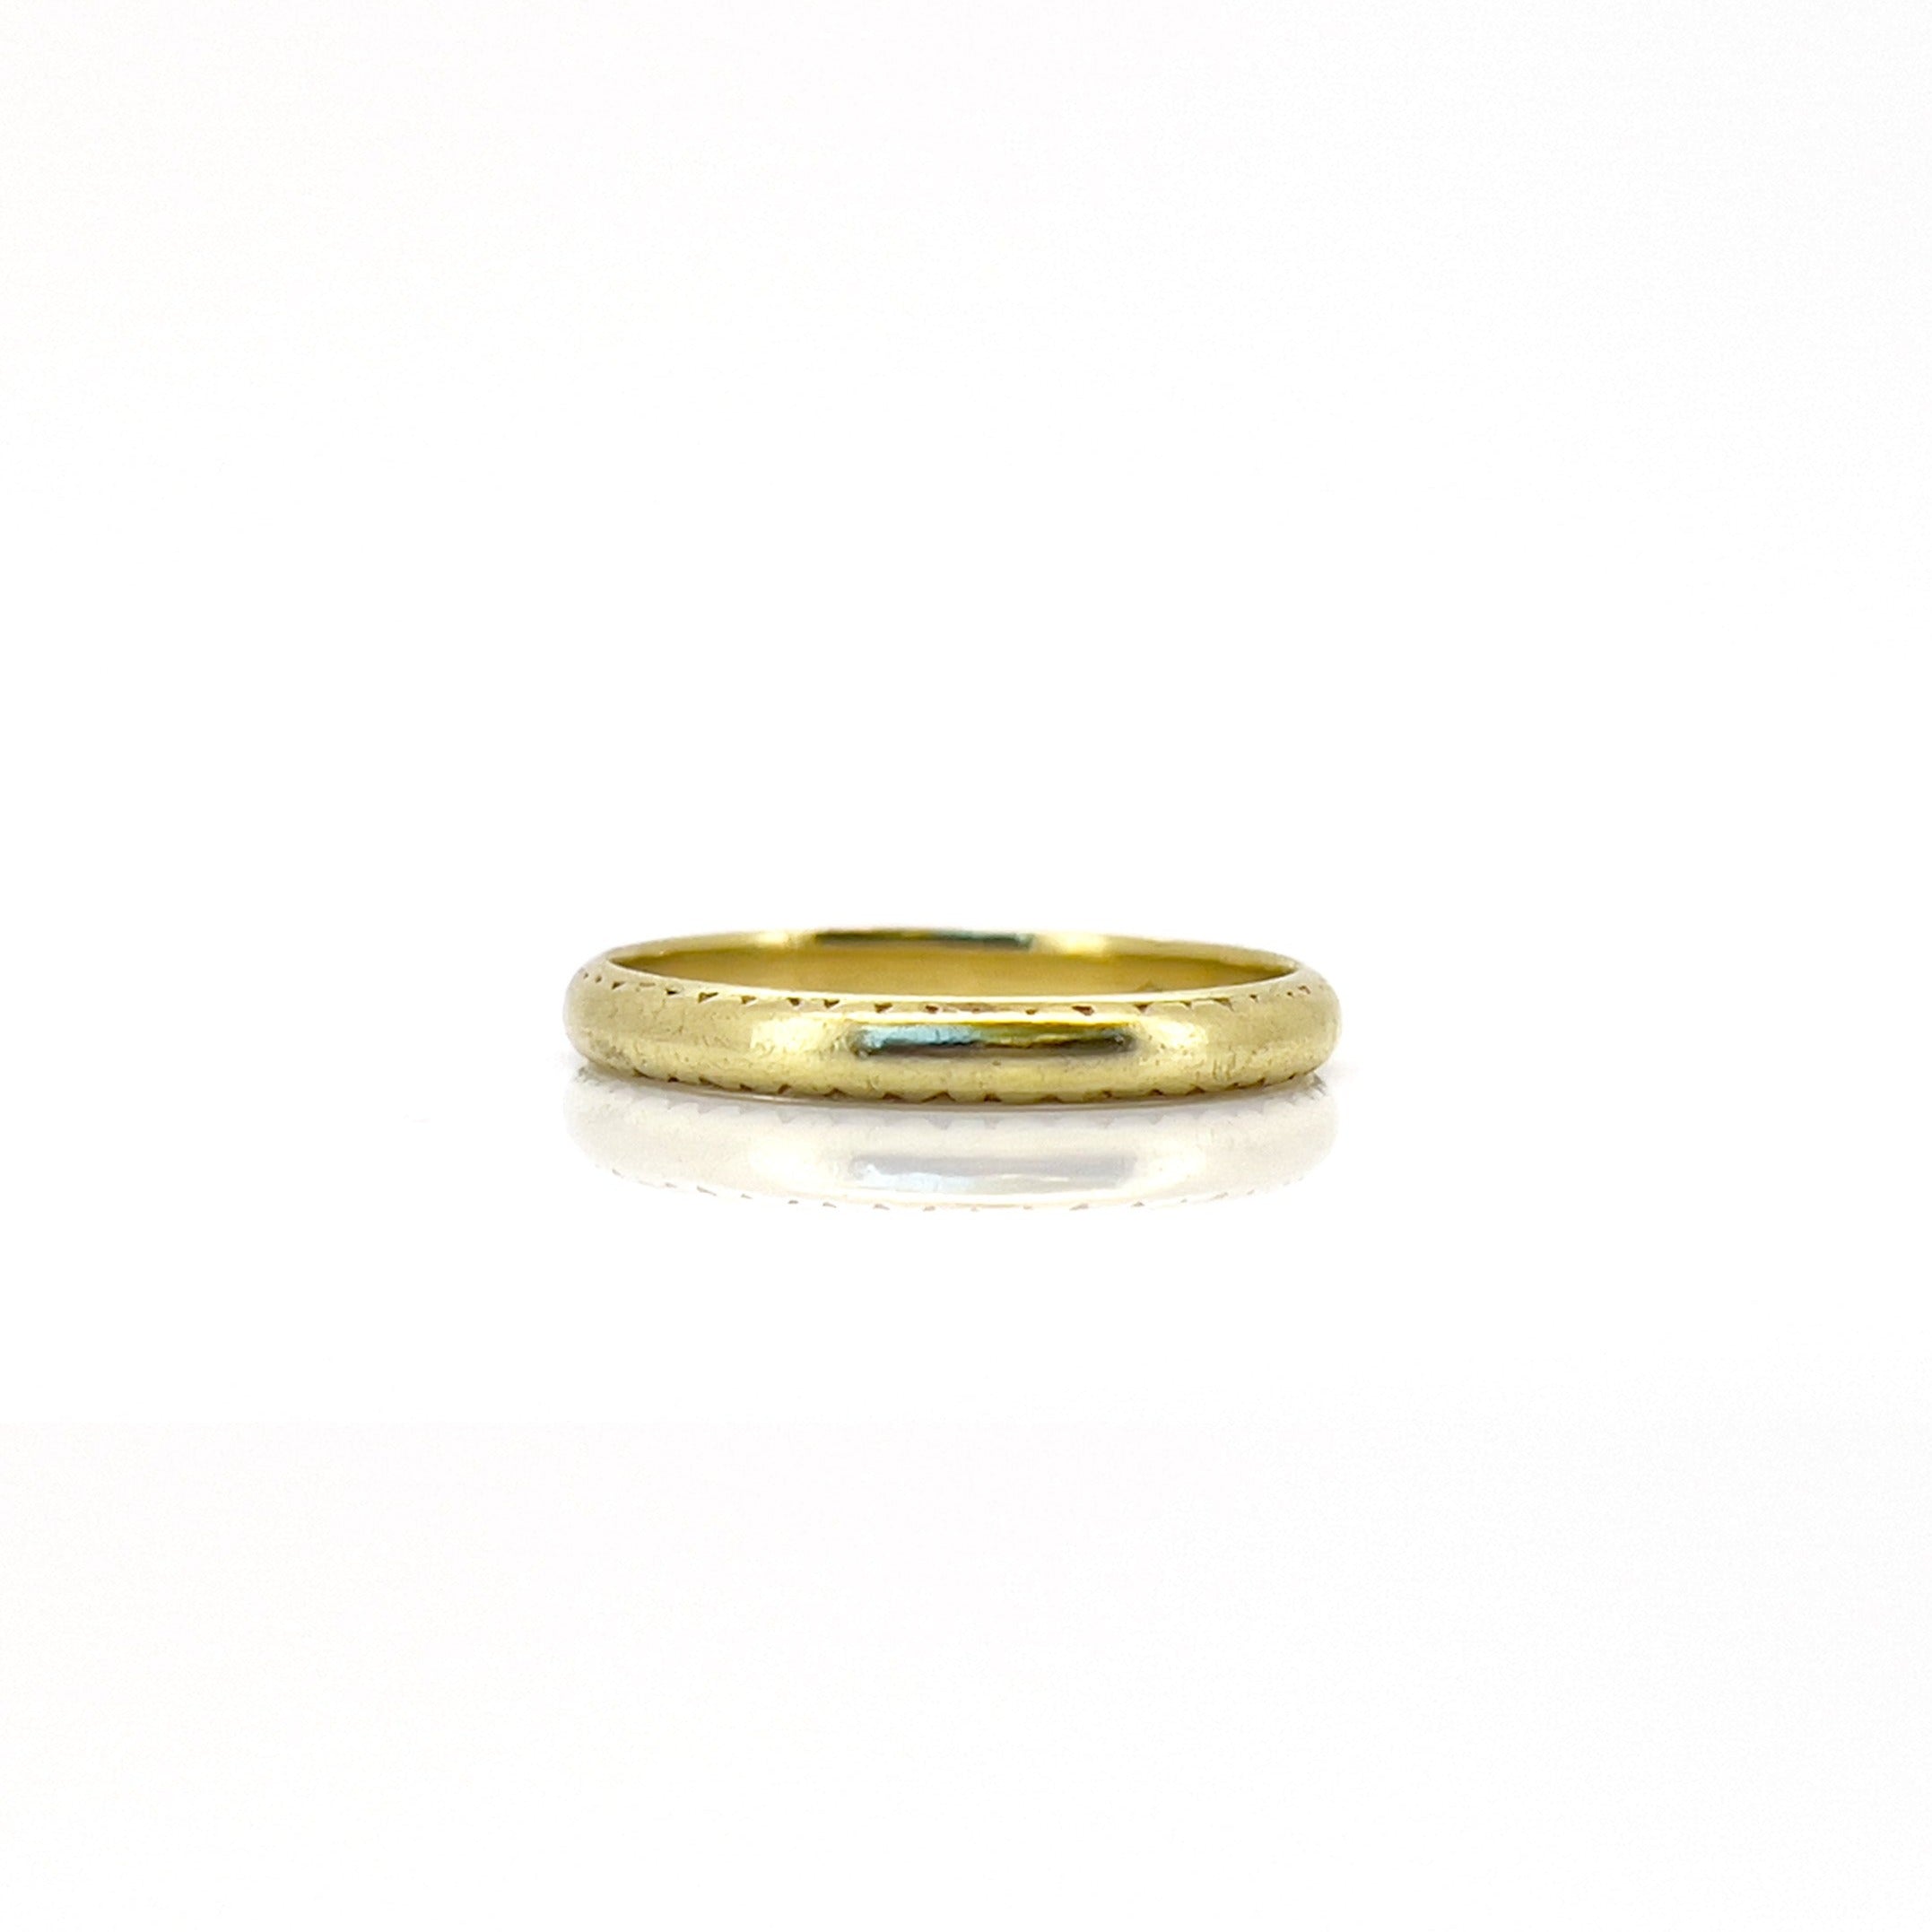 Antique 18K Gold Wedding Ring, Size 5.25